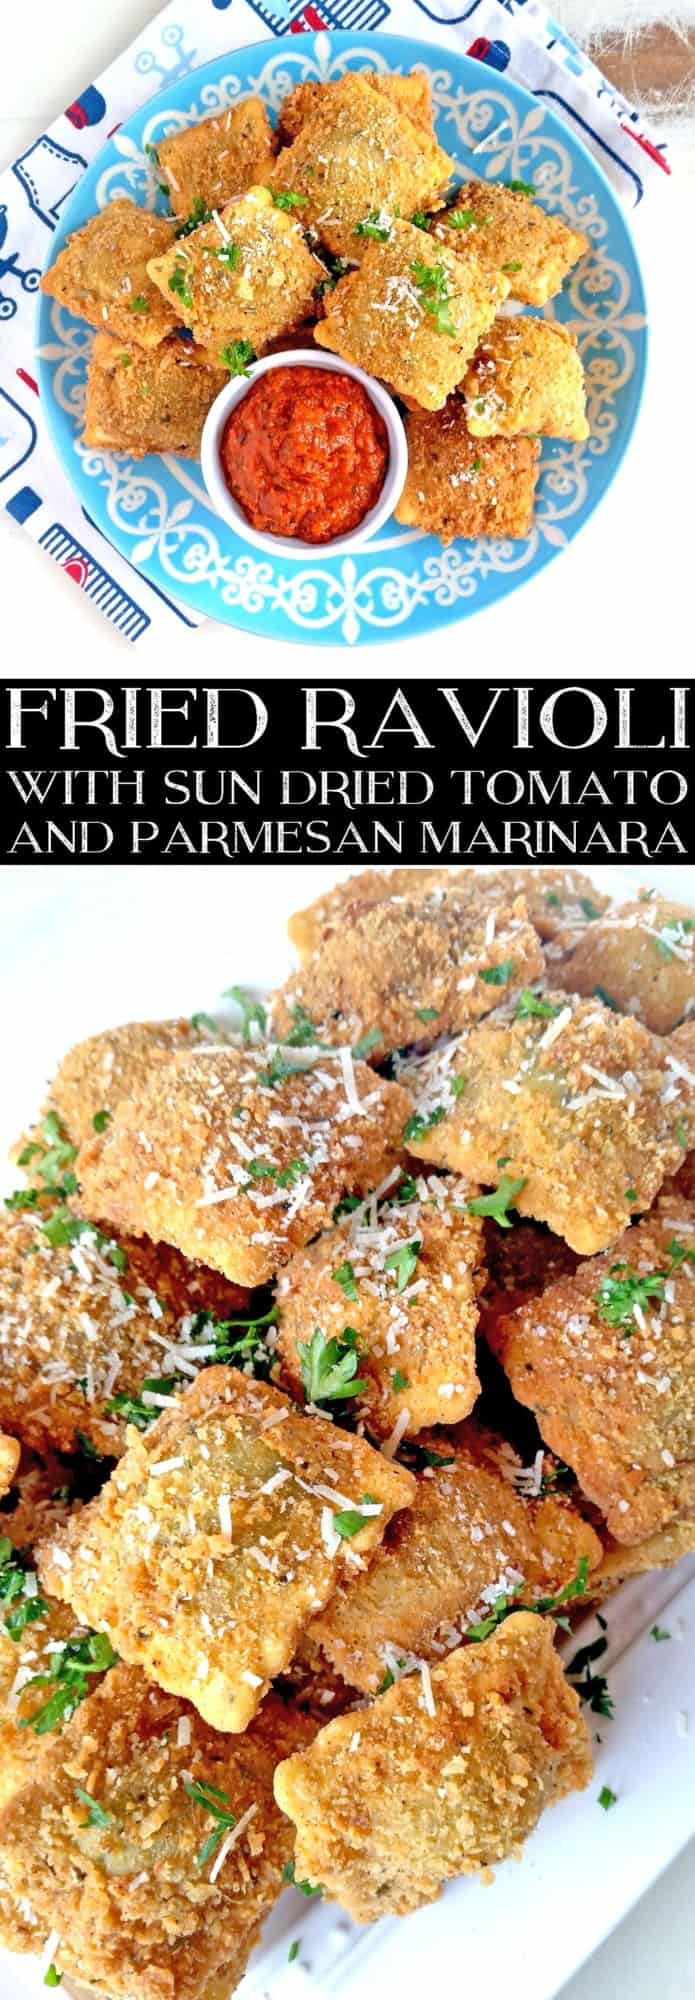 Fried Ravioli with Sundried Tomato and Parmesan Marinara 3